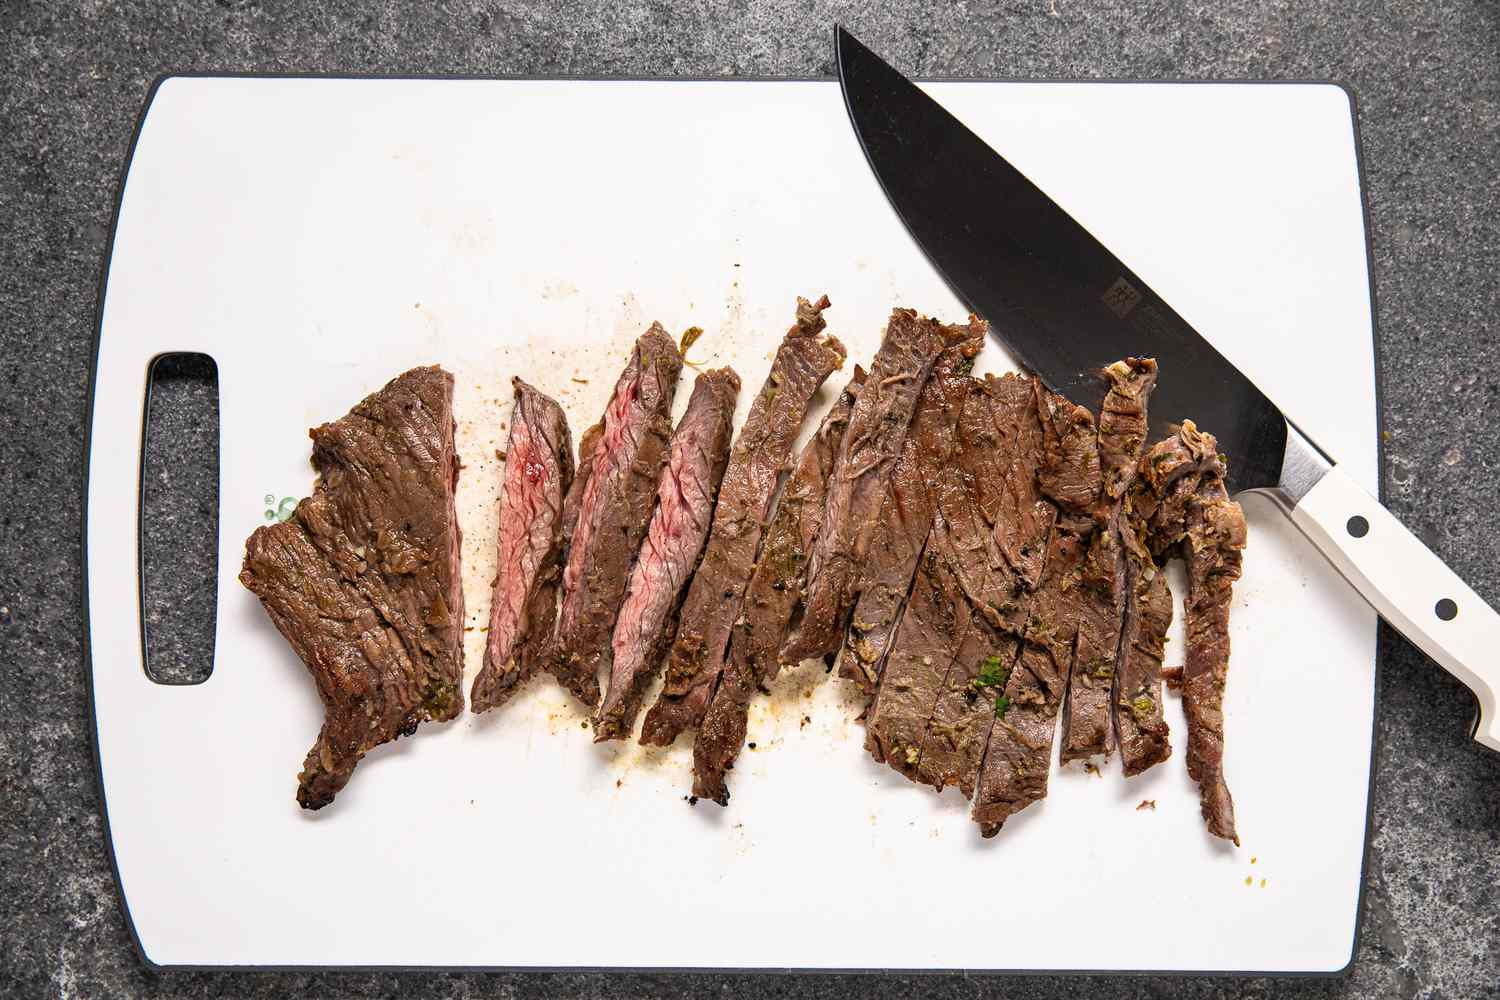 Arrachera (Mexican Skirt Steak) Cut Into Slices on a Cutting Board